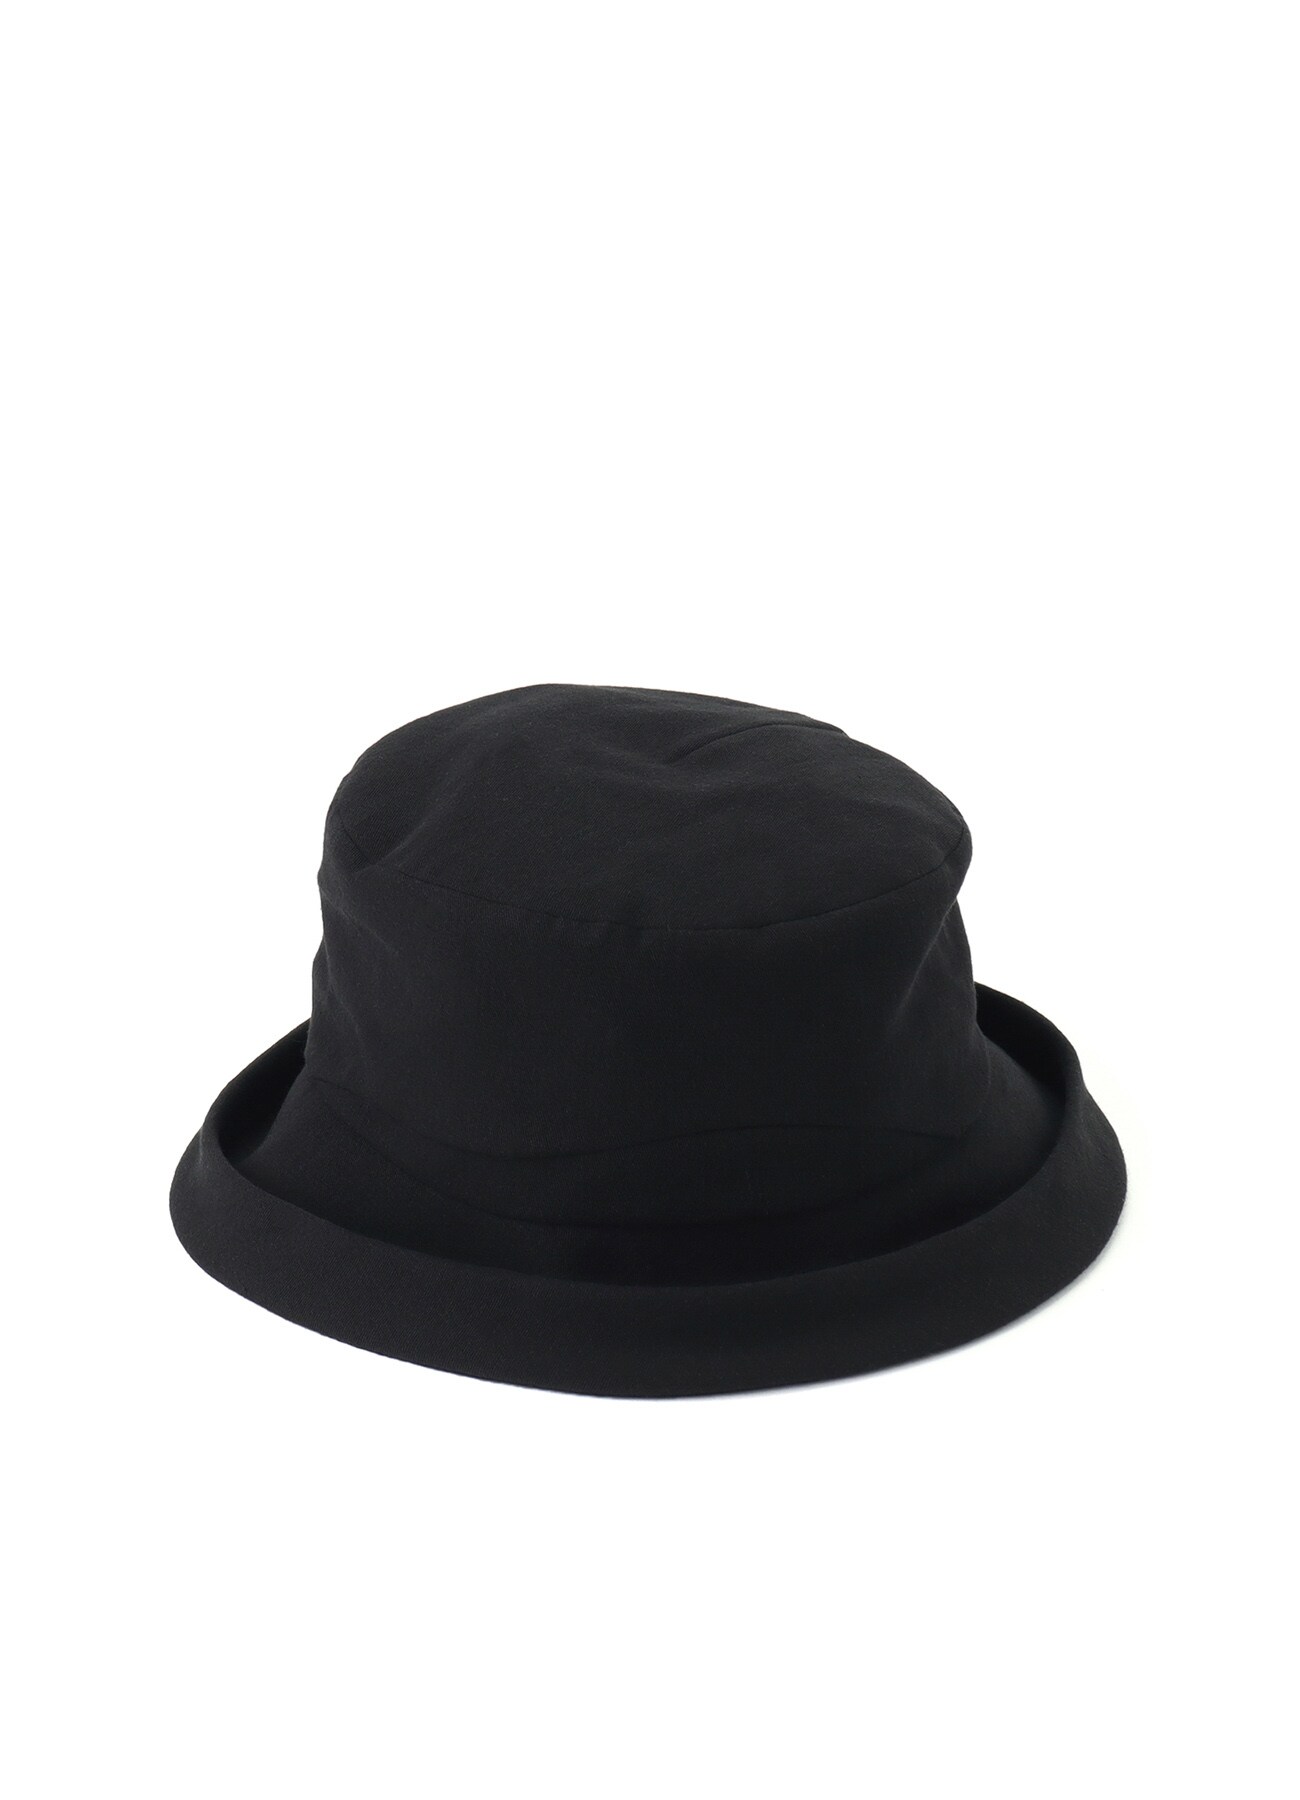 COTTON/LINEN GABARDINE PANELLED HAT